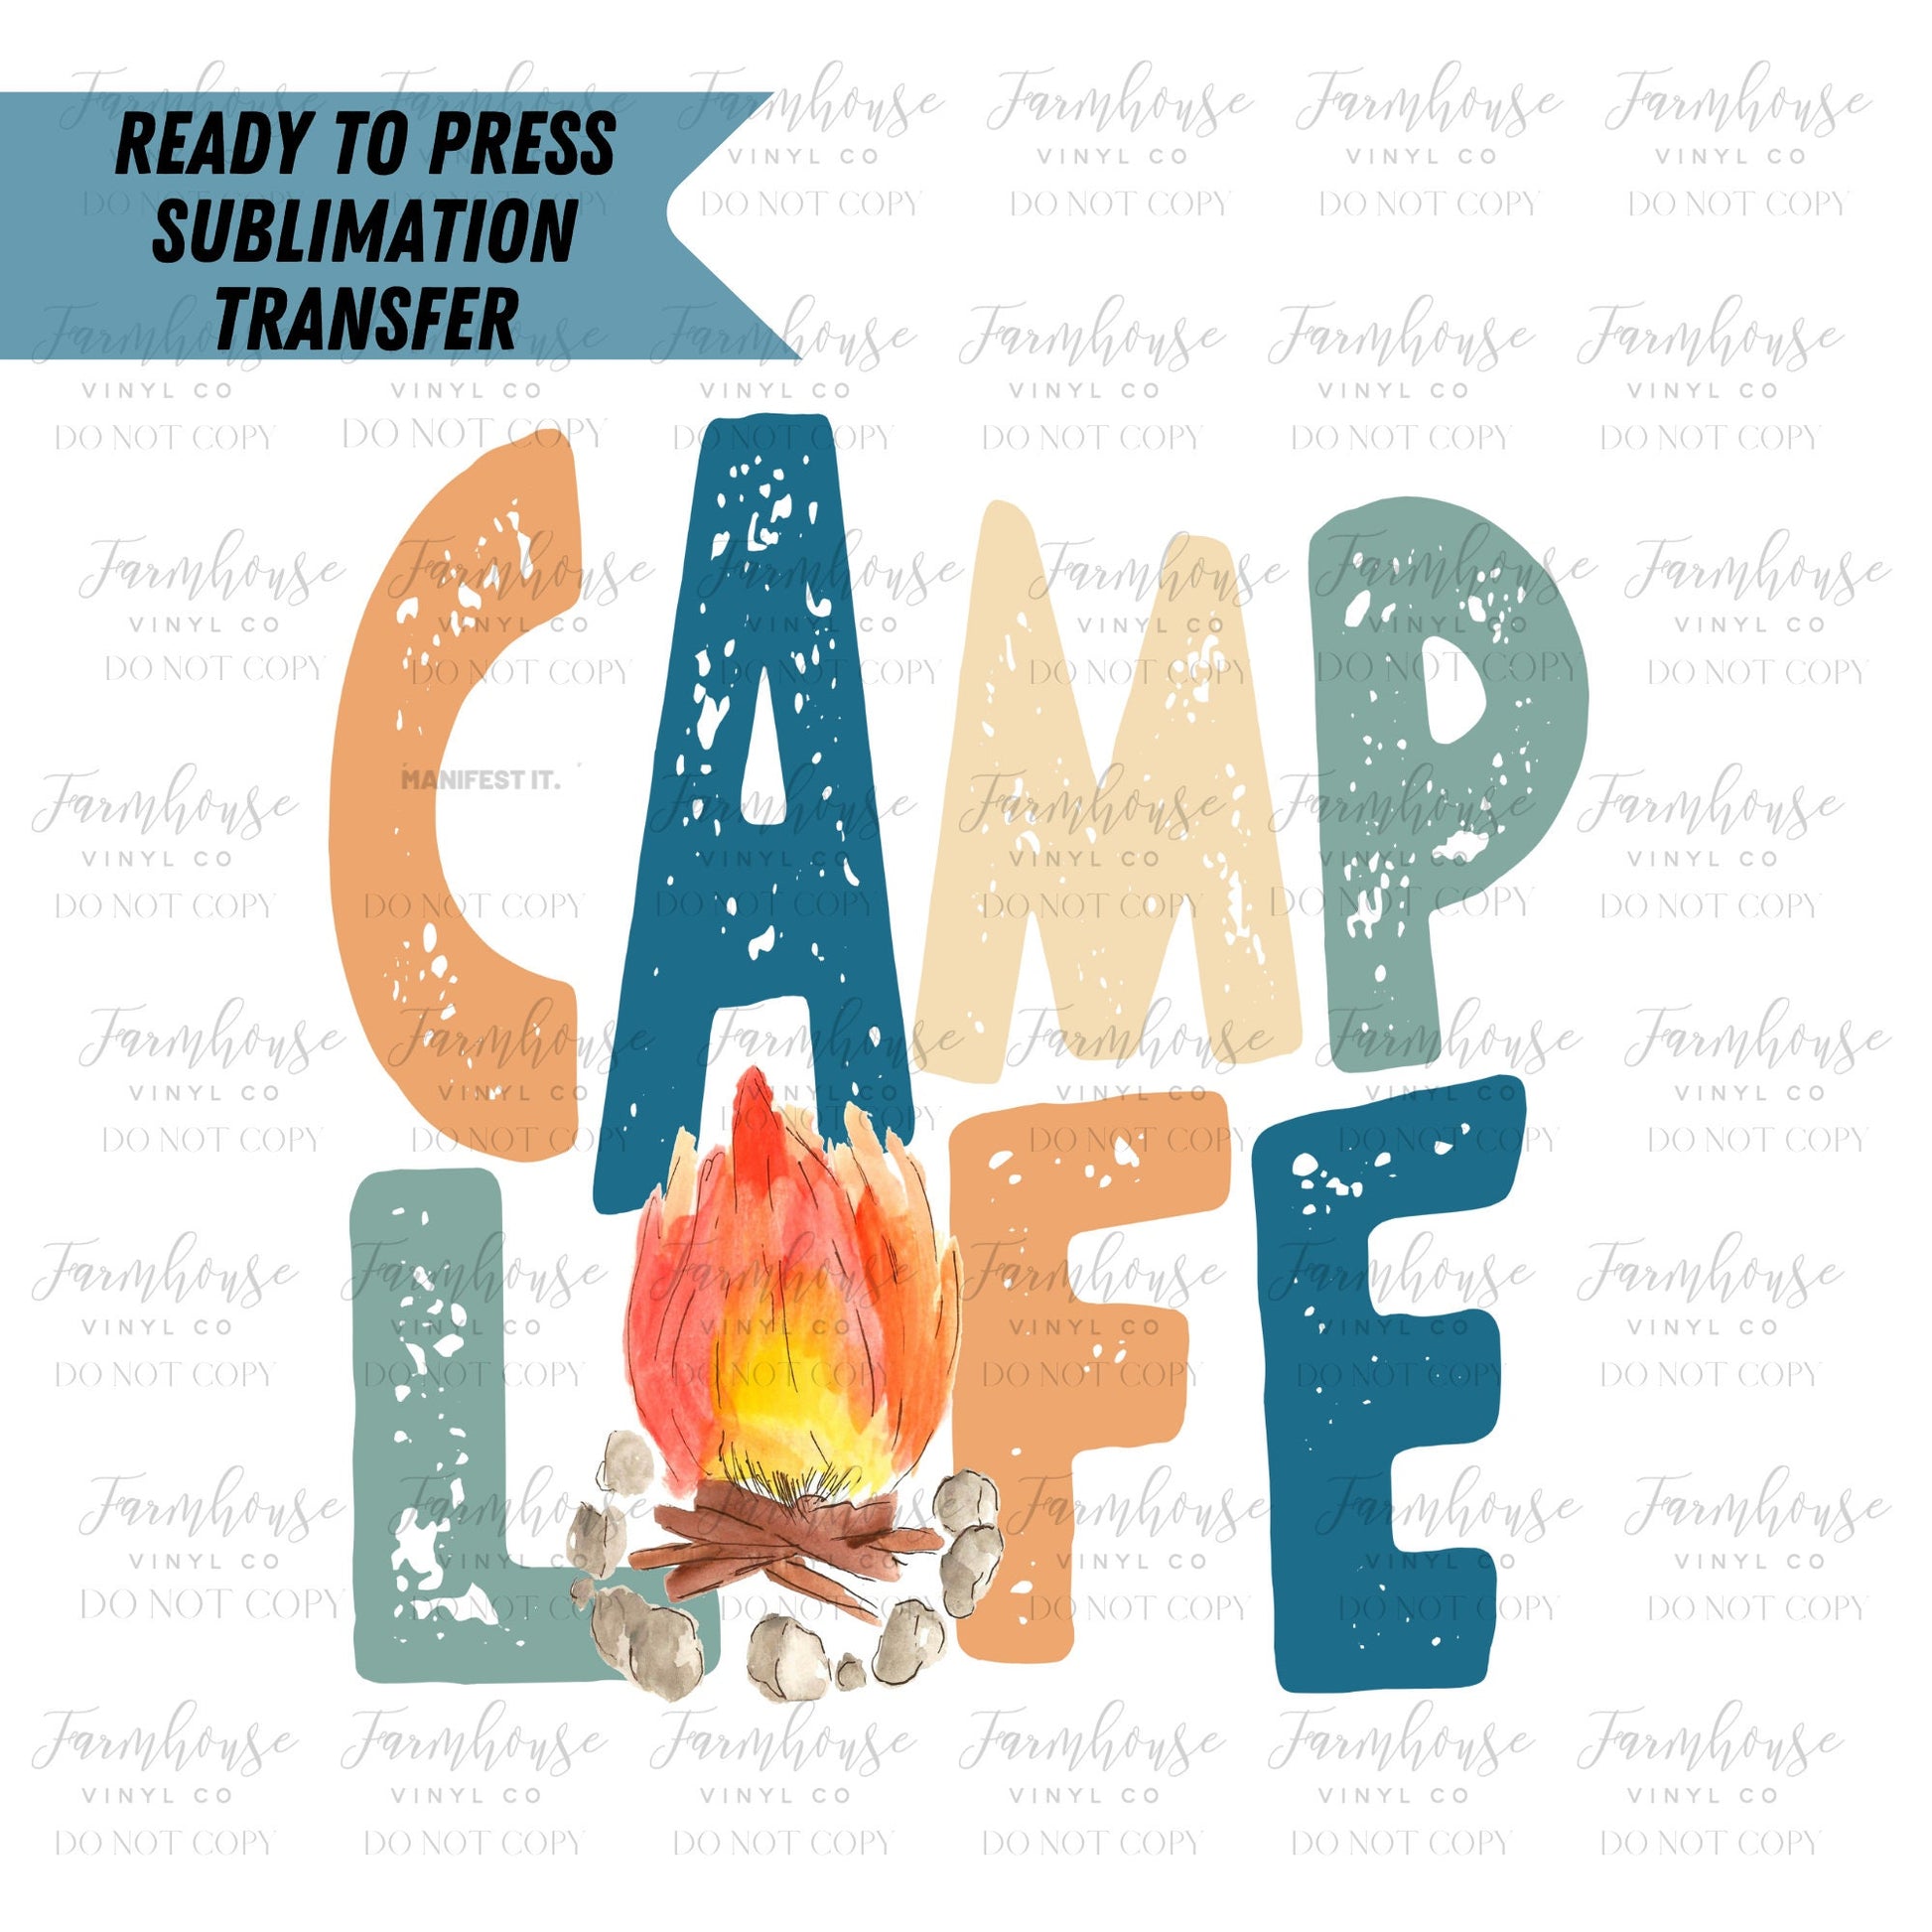 Camp Life Distressed Ready To Press Sublimation Transfer - Farmhouse Vinyl Co